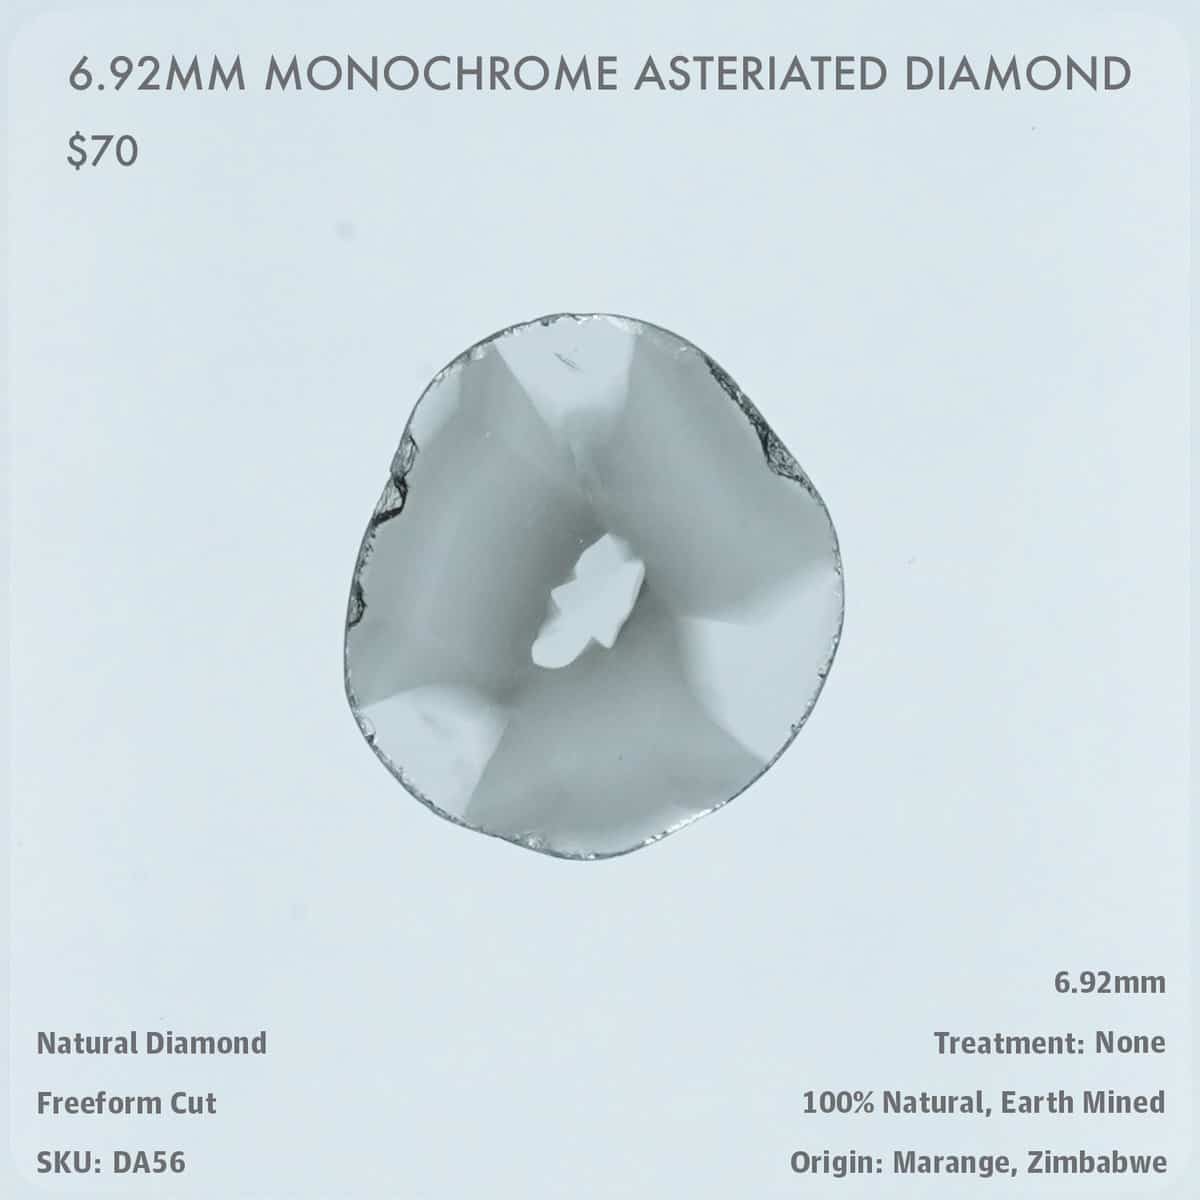 6.92mm Monochrome Asteriated Diamond